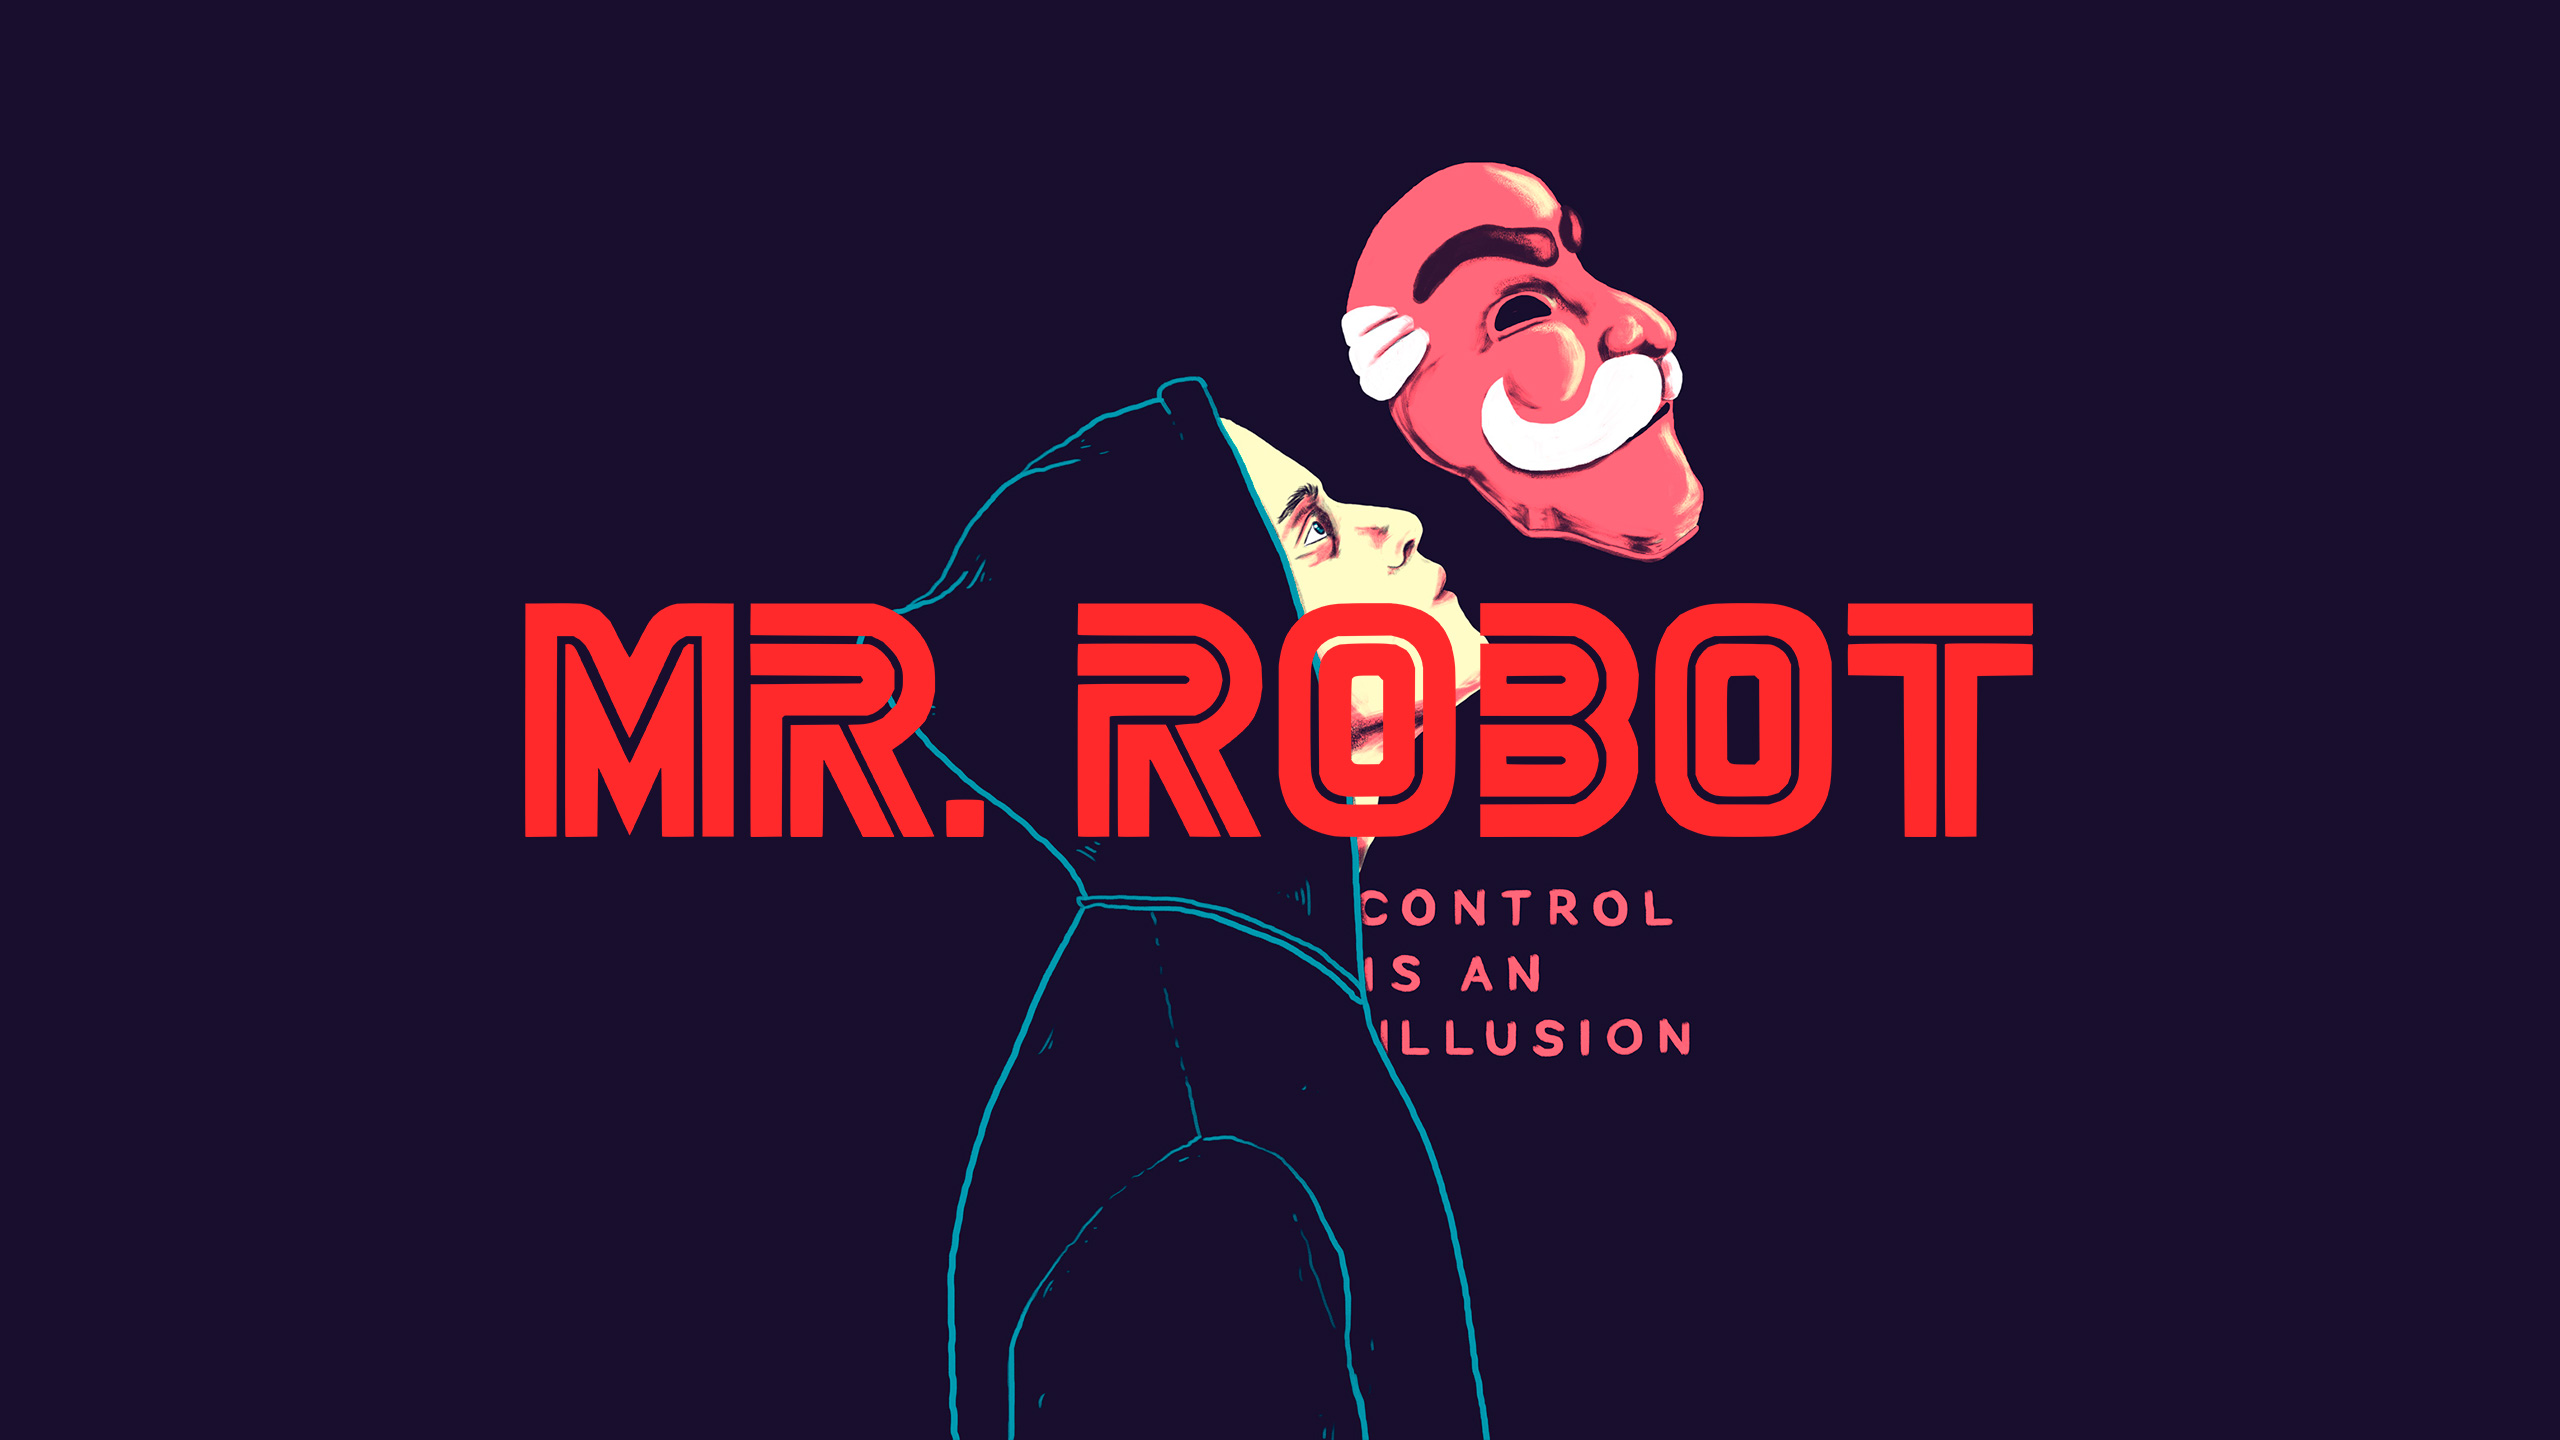 Mr. Robot Wallpapers